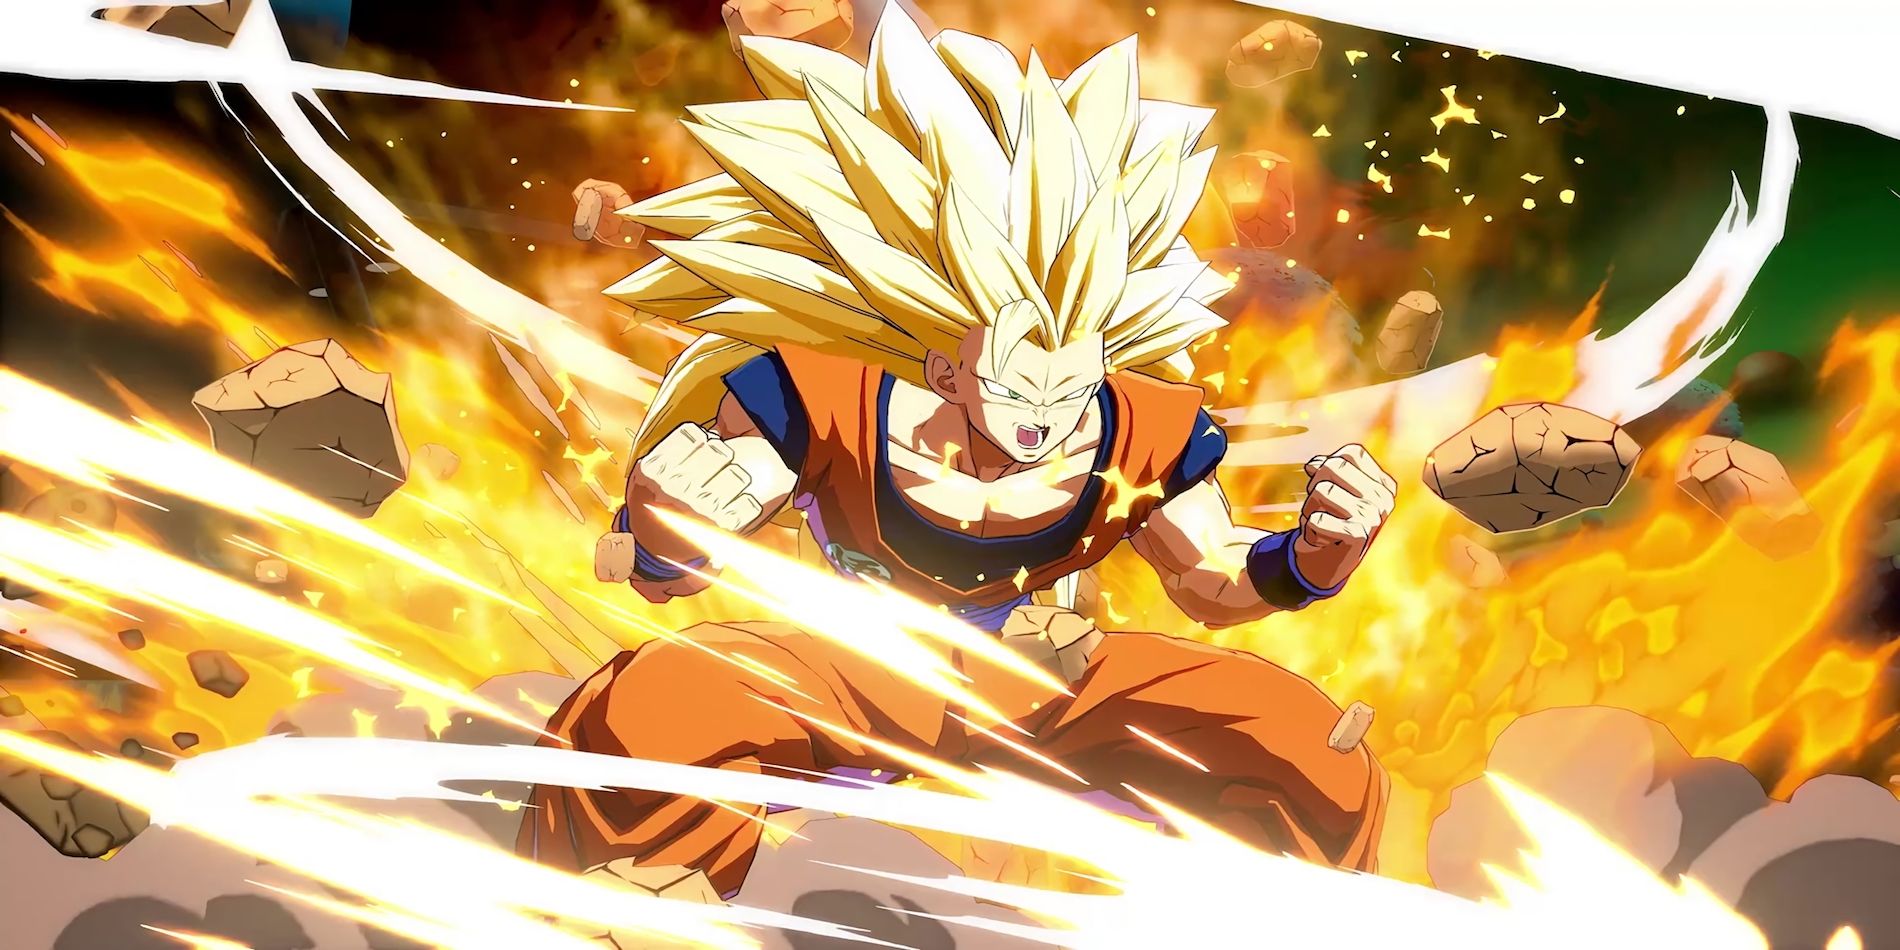 Dragon Ball: How Goku Can Use Super Saiyan 3 Better In The Future